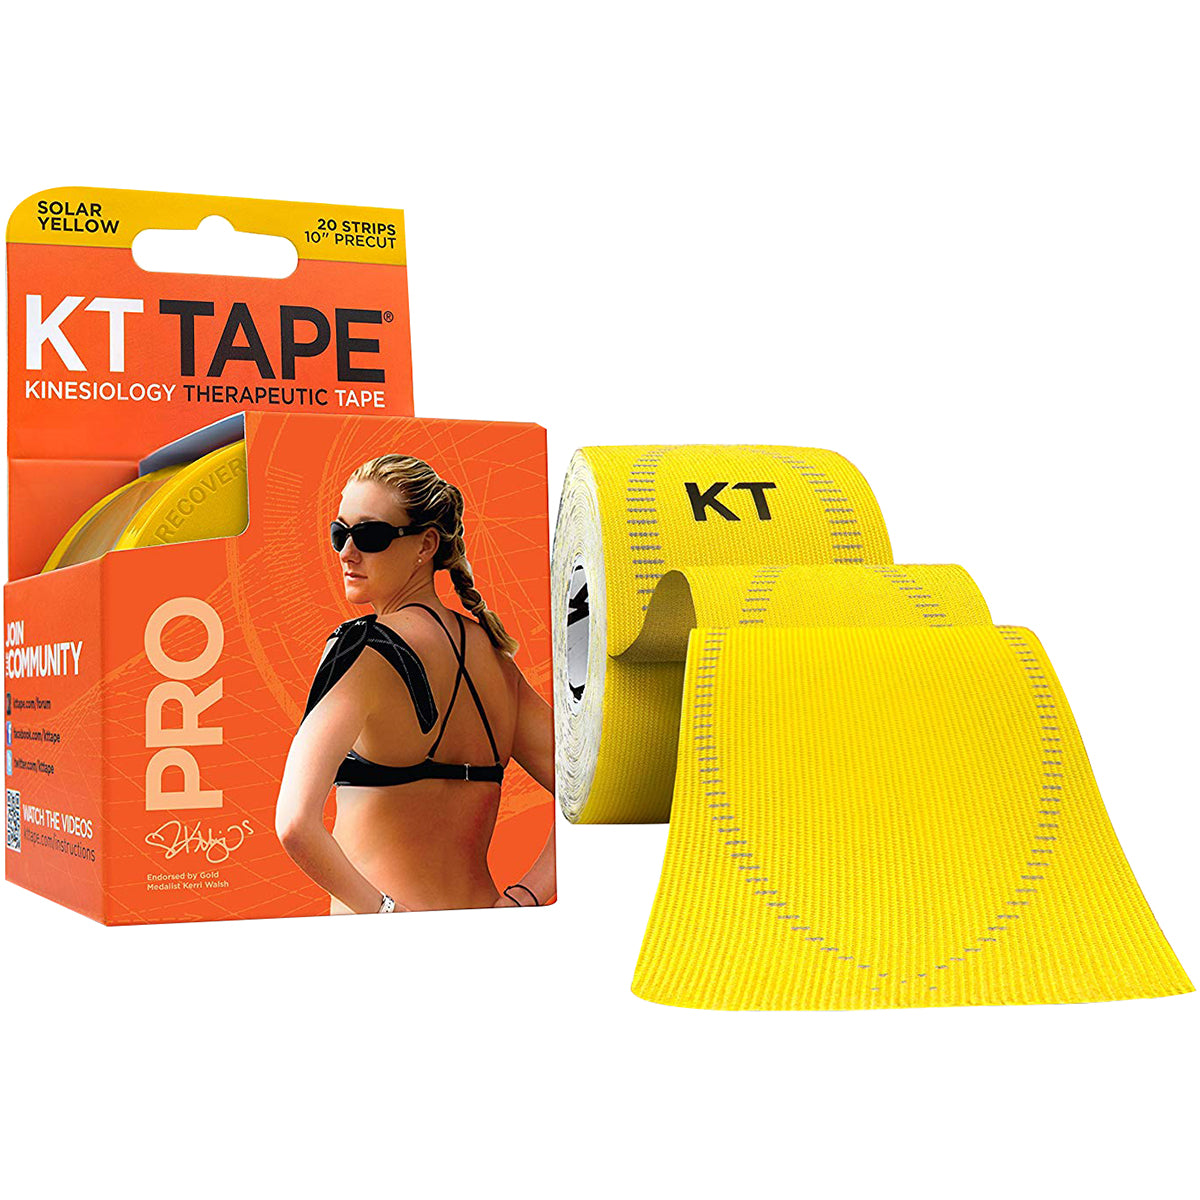 KT Tape Pro 10" Precut Kinesiology Elastic Sports Roll - 20 Strips - Yellow KT Tape